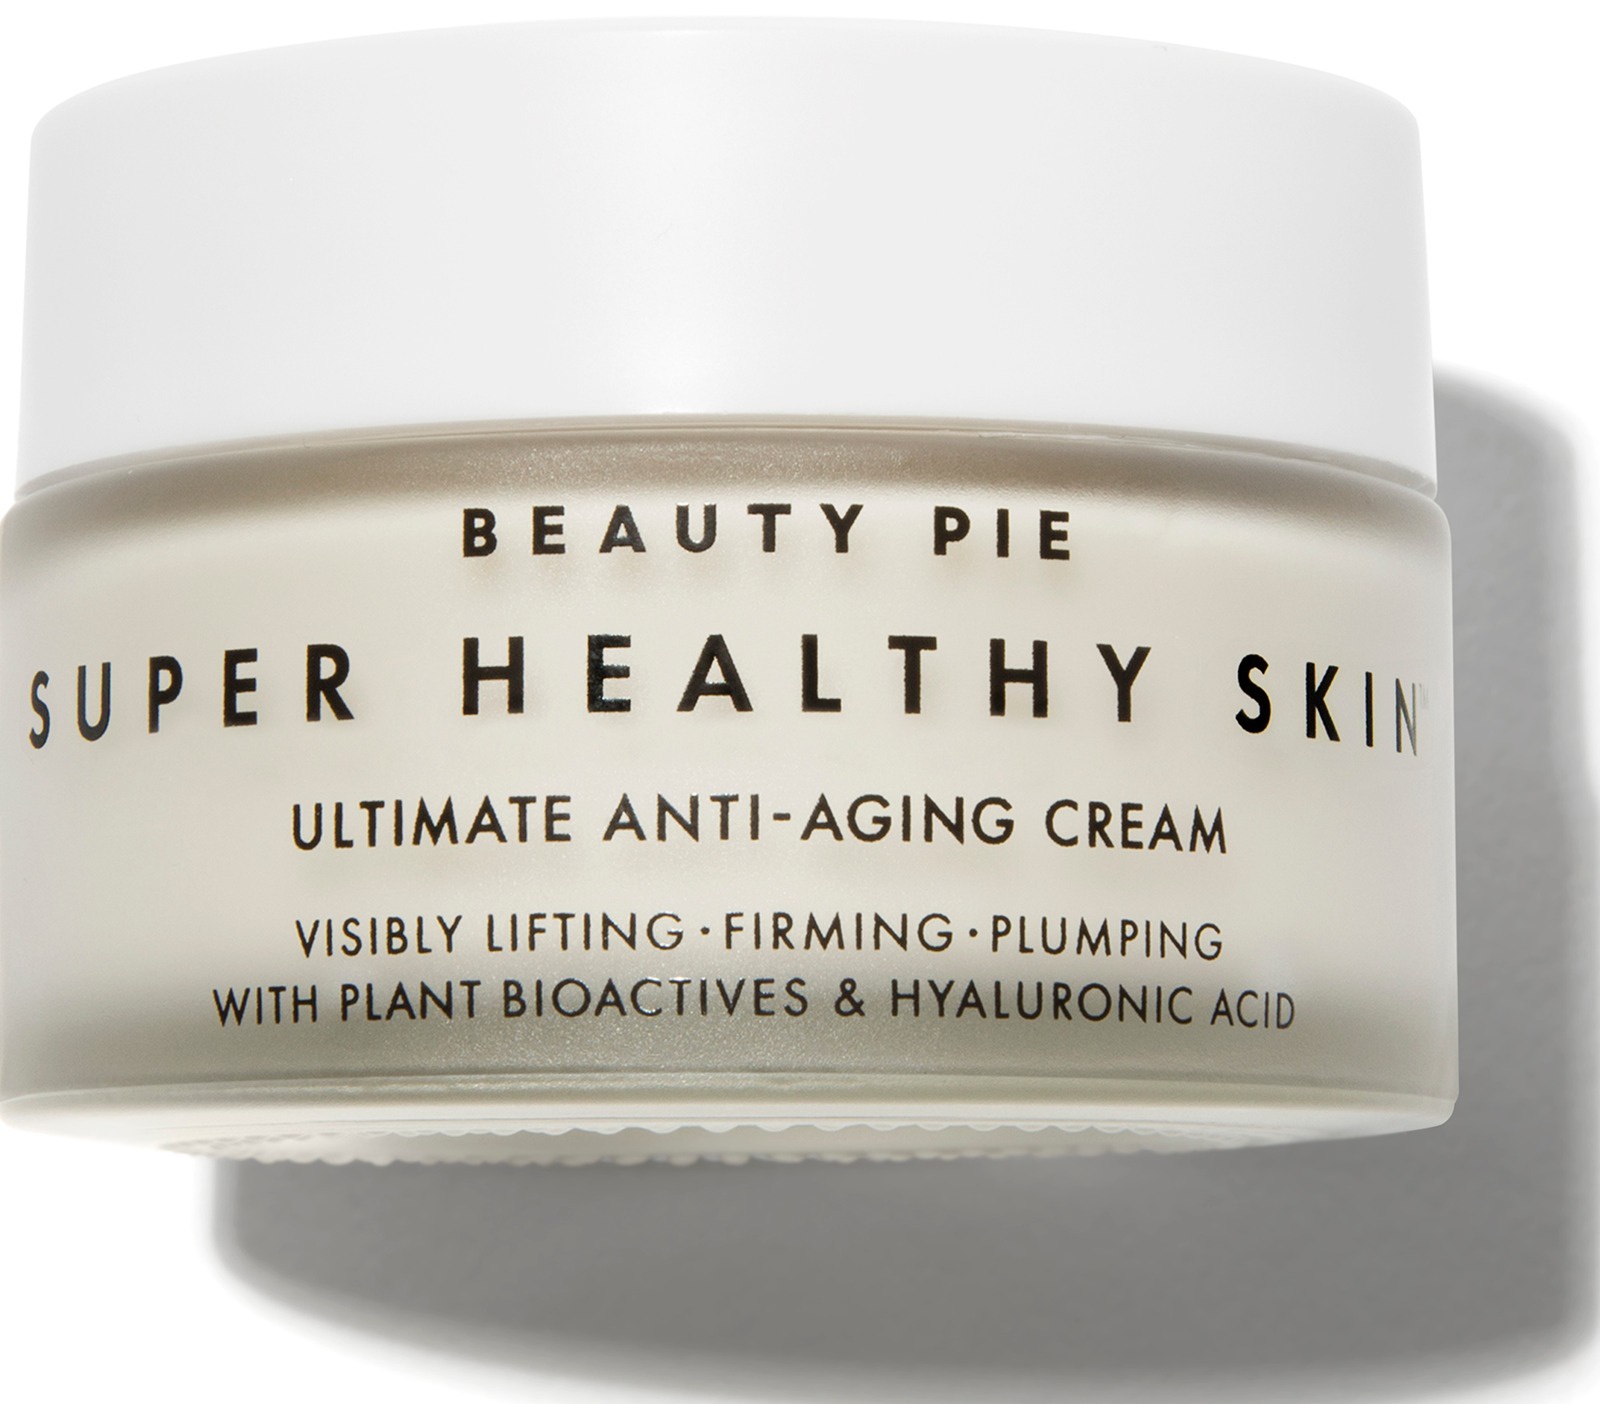 Beauty Pie Super Healthy Skin Ultimate Anti-Aging Cream